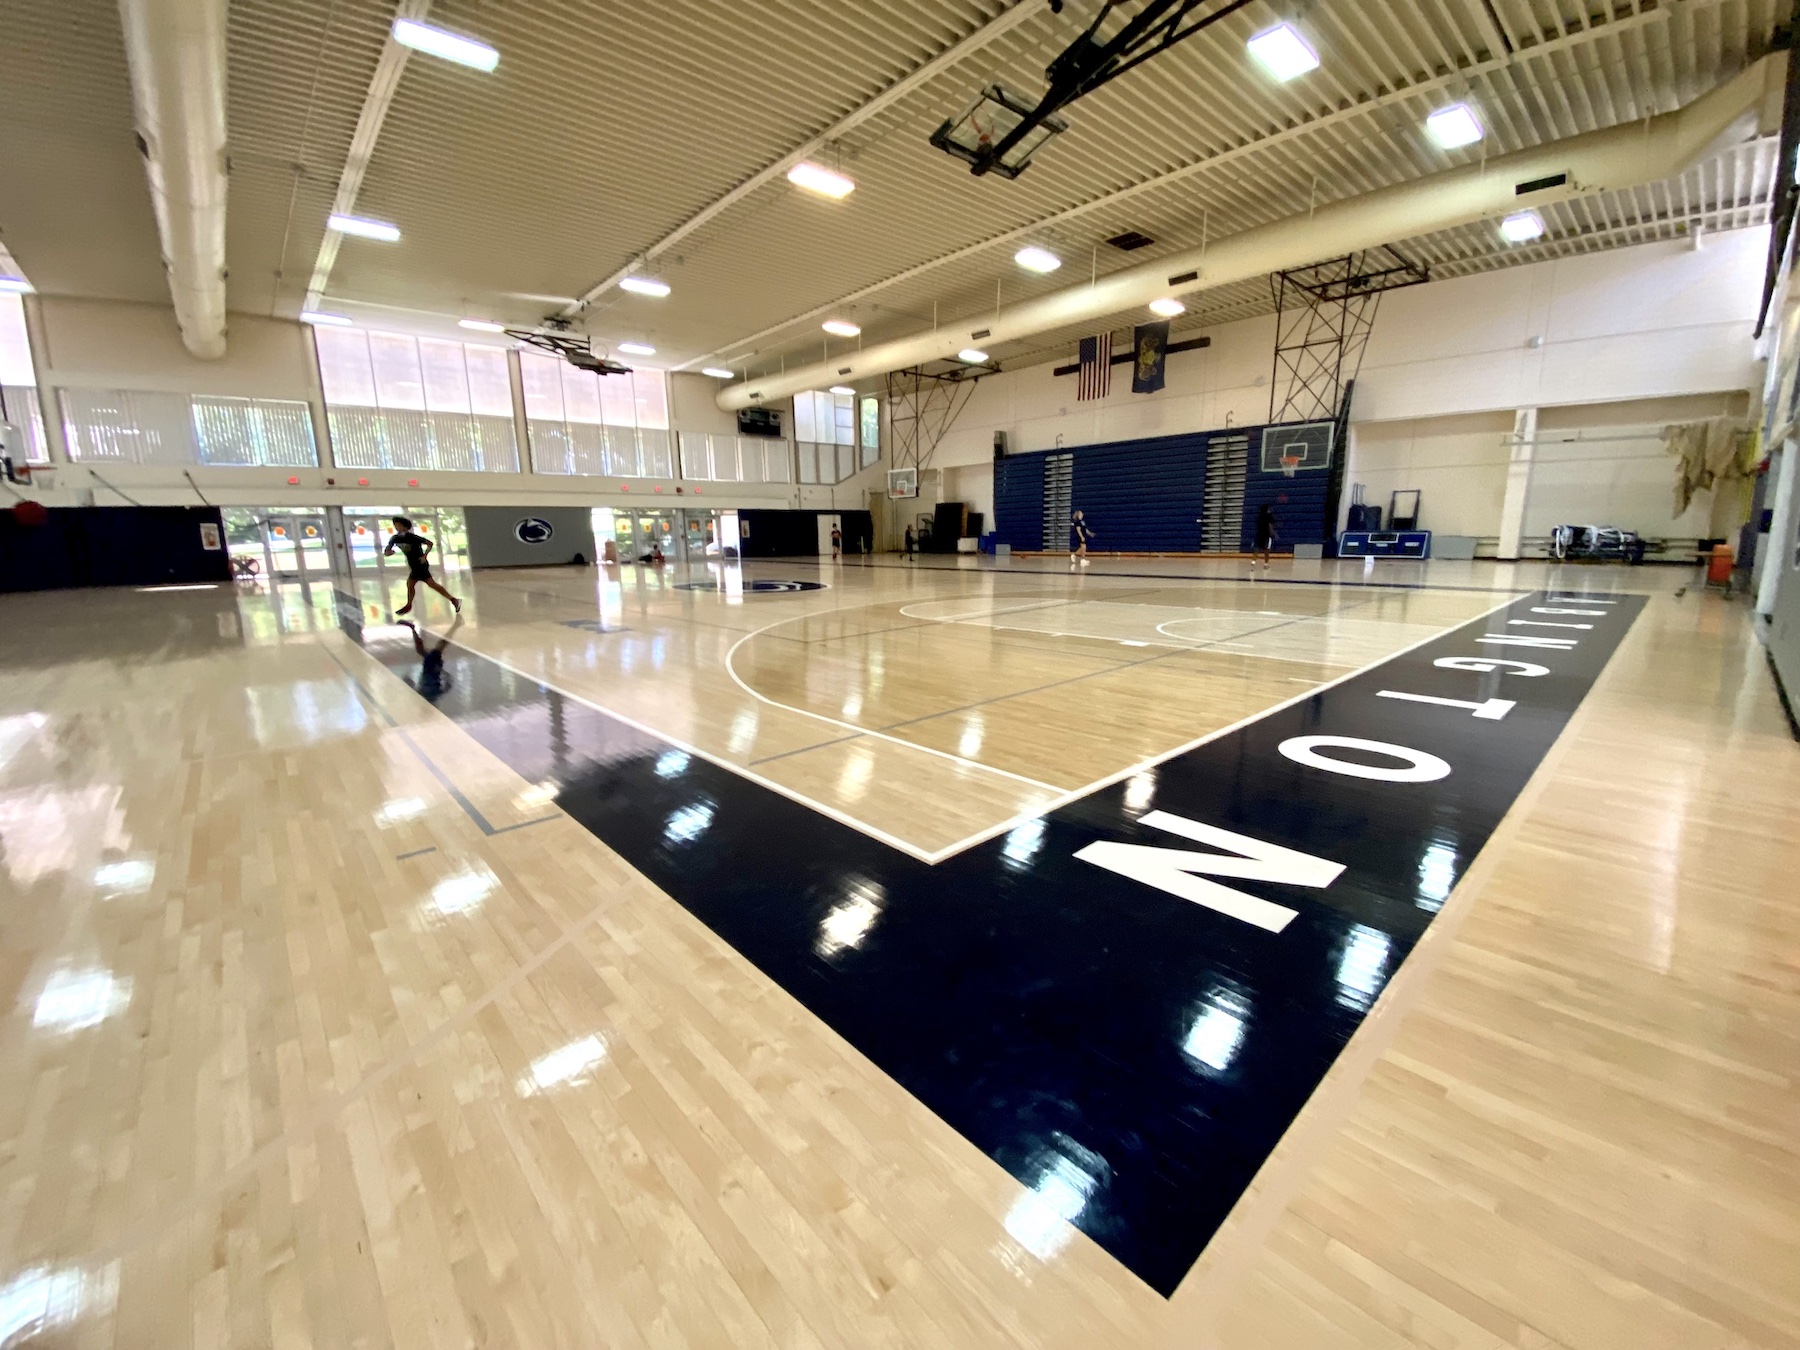 Penn State Abington's New Gymnasium Flooring Miller Sports